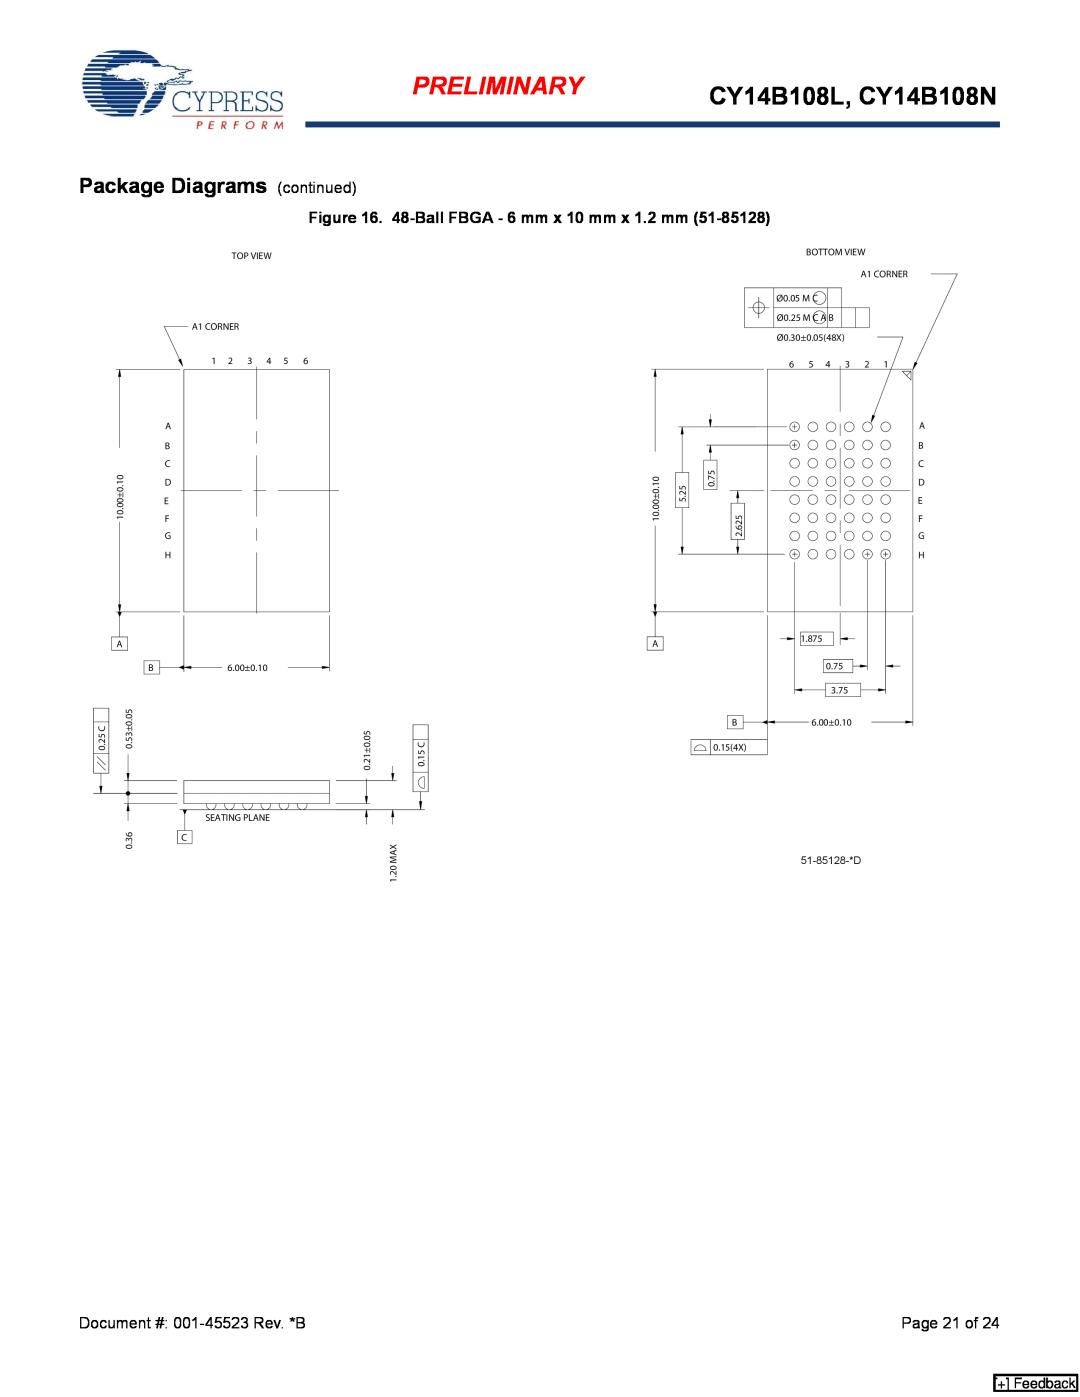 Cypress Package Diagrams continued, Preliminary, CY14B108L, CY14B108N, 48-Ball FBGA - 6 mm x 10 mm x 1.2 mm, + Feedback 